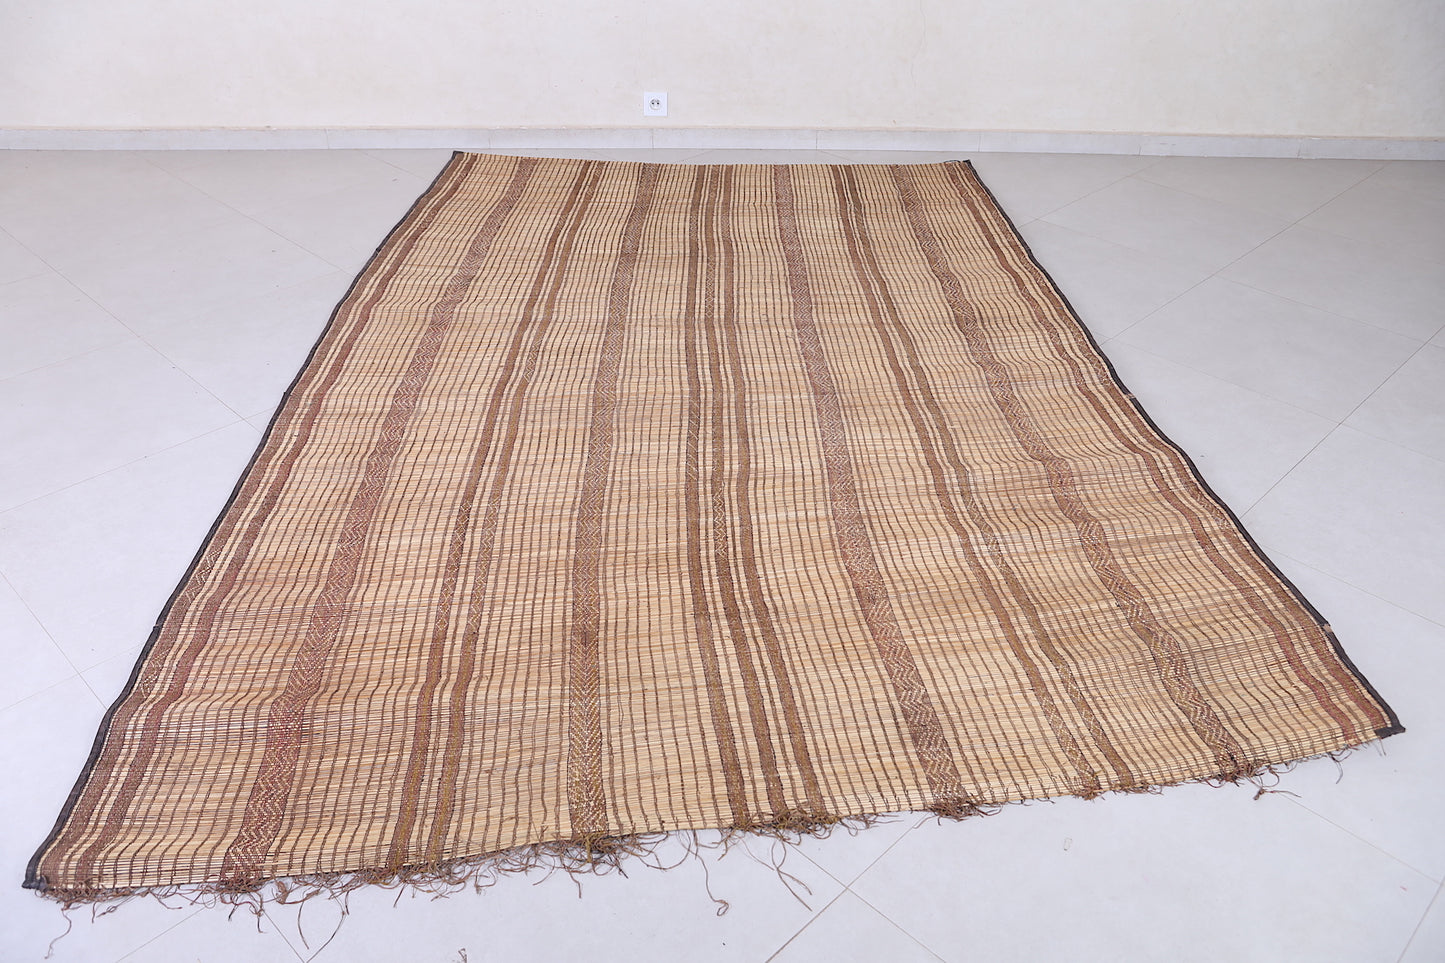 Tuareg rug 6.4 X 9.6 Feet